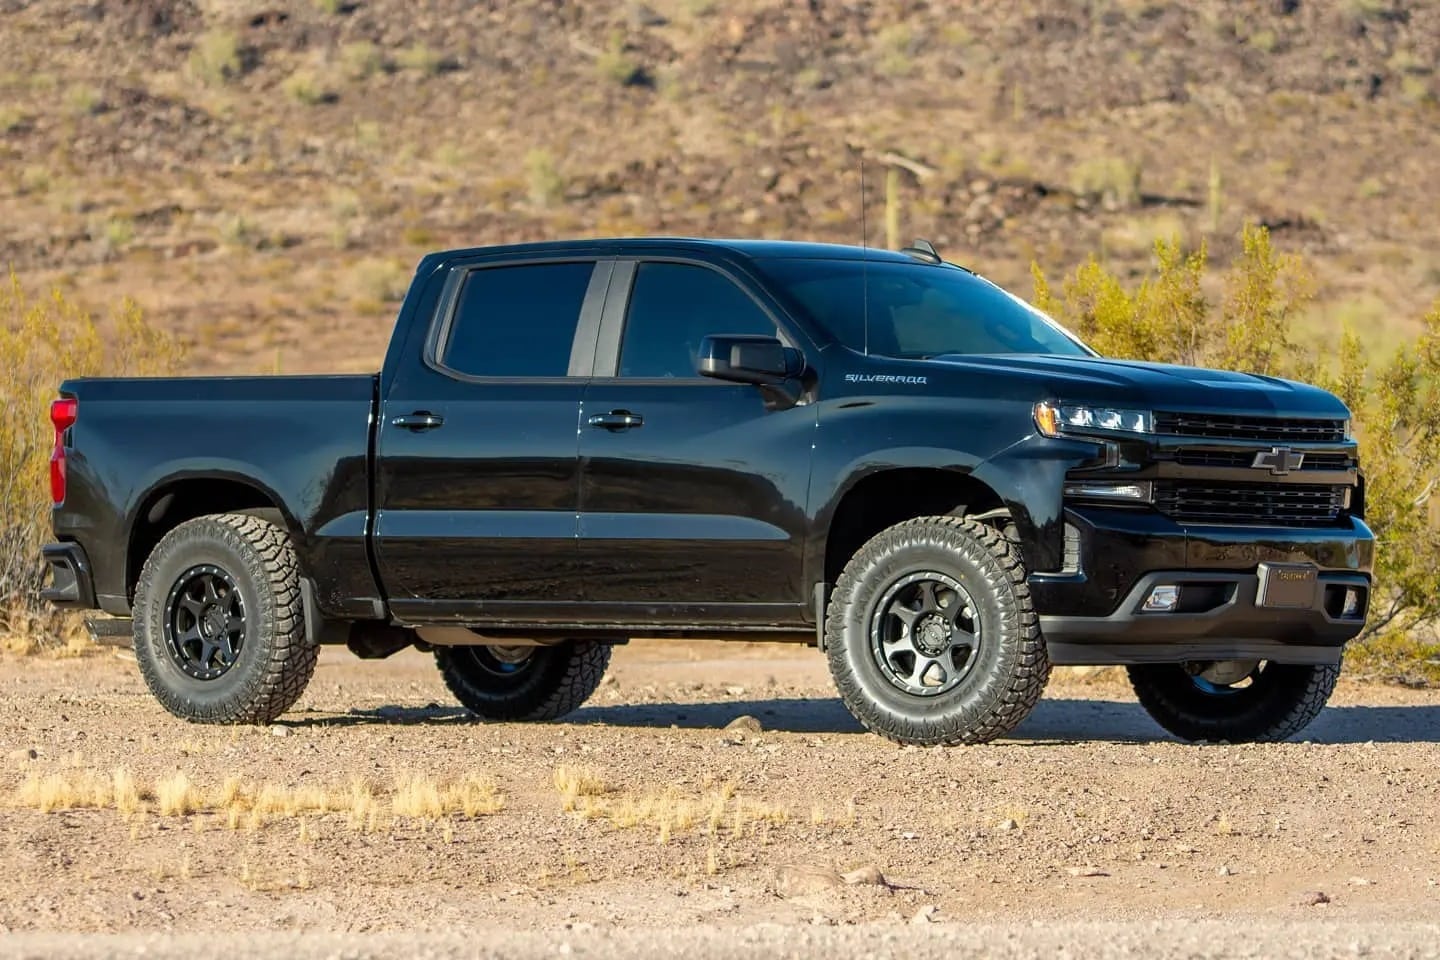 A 2019 Chevrolet Silverado on a dirt road.